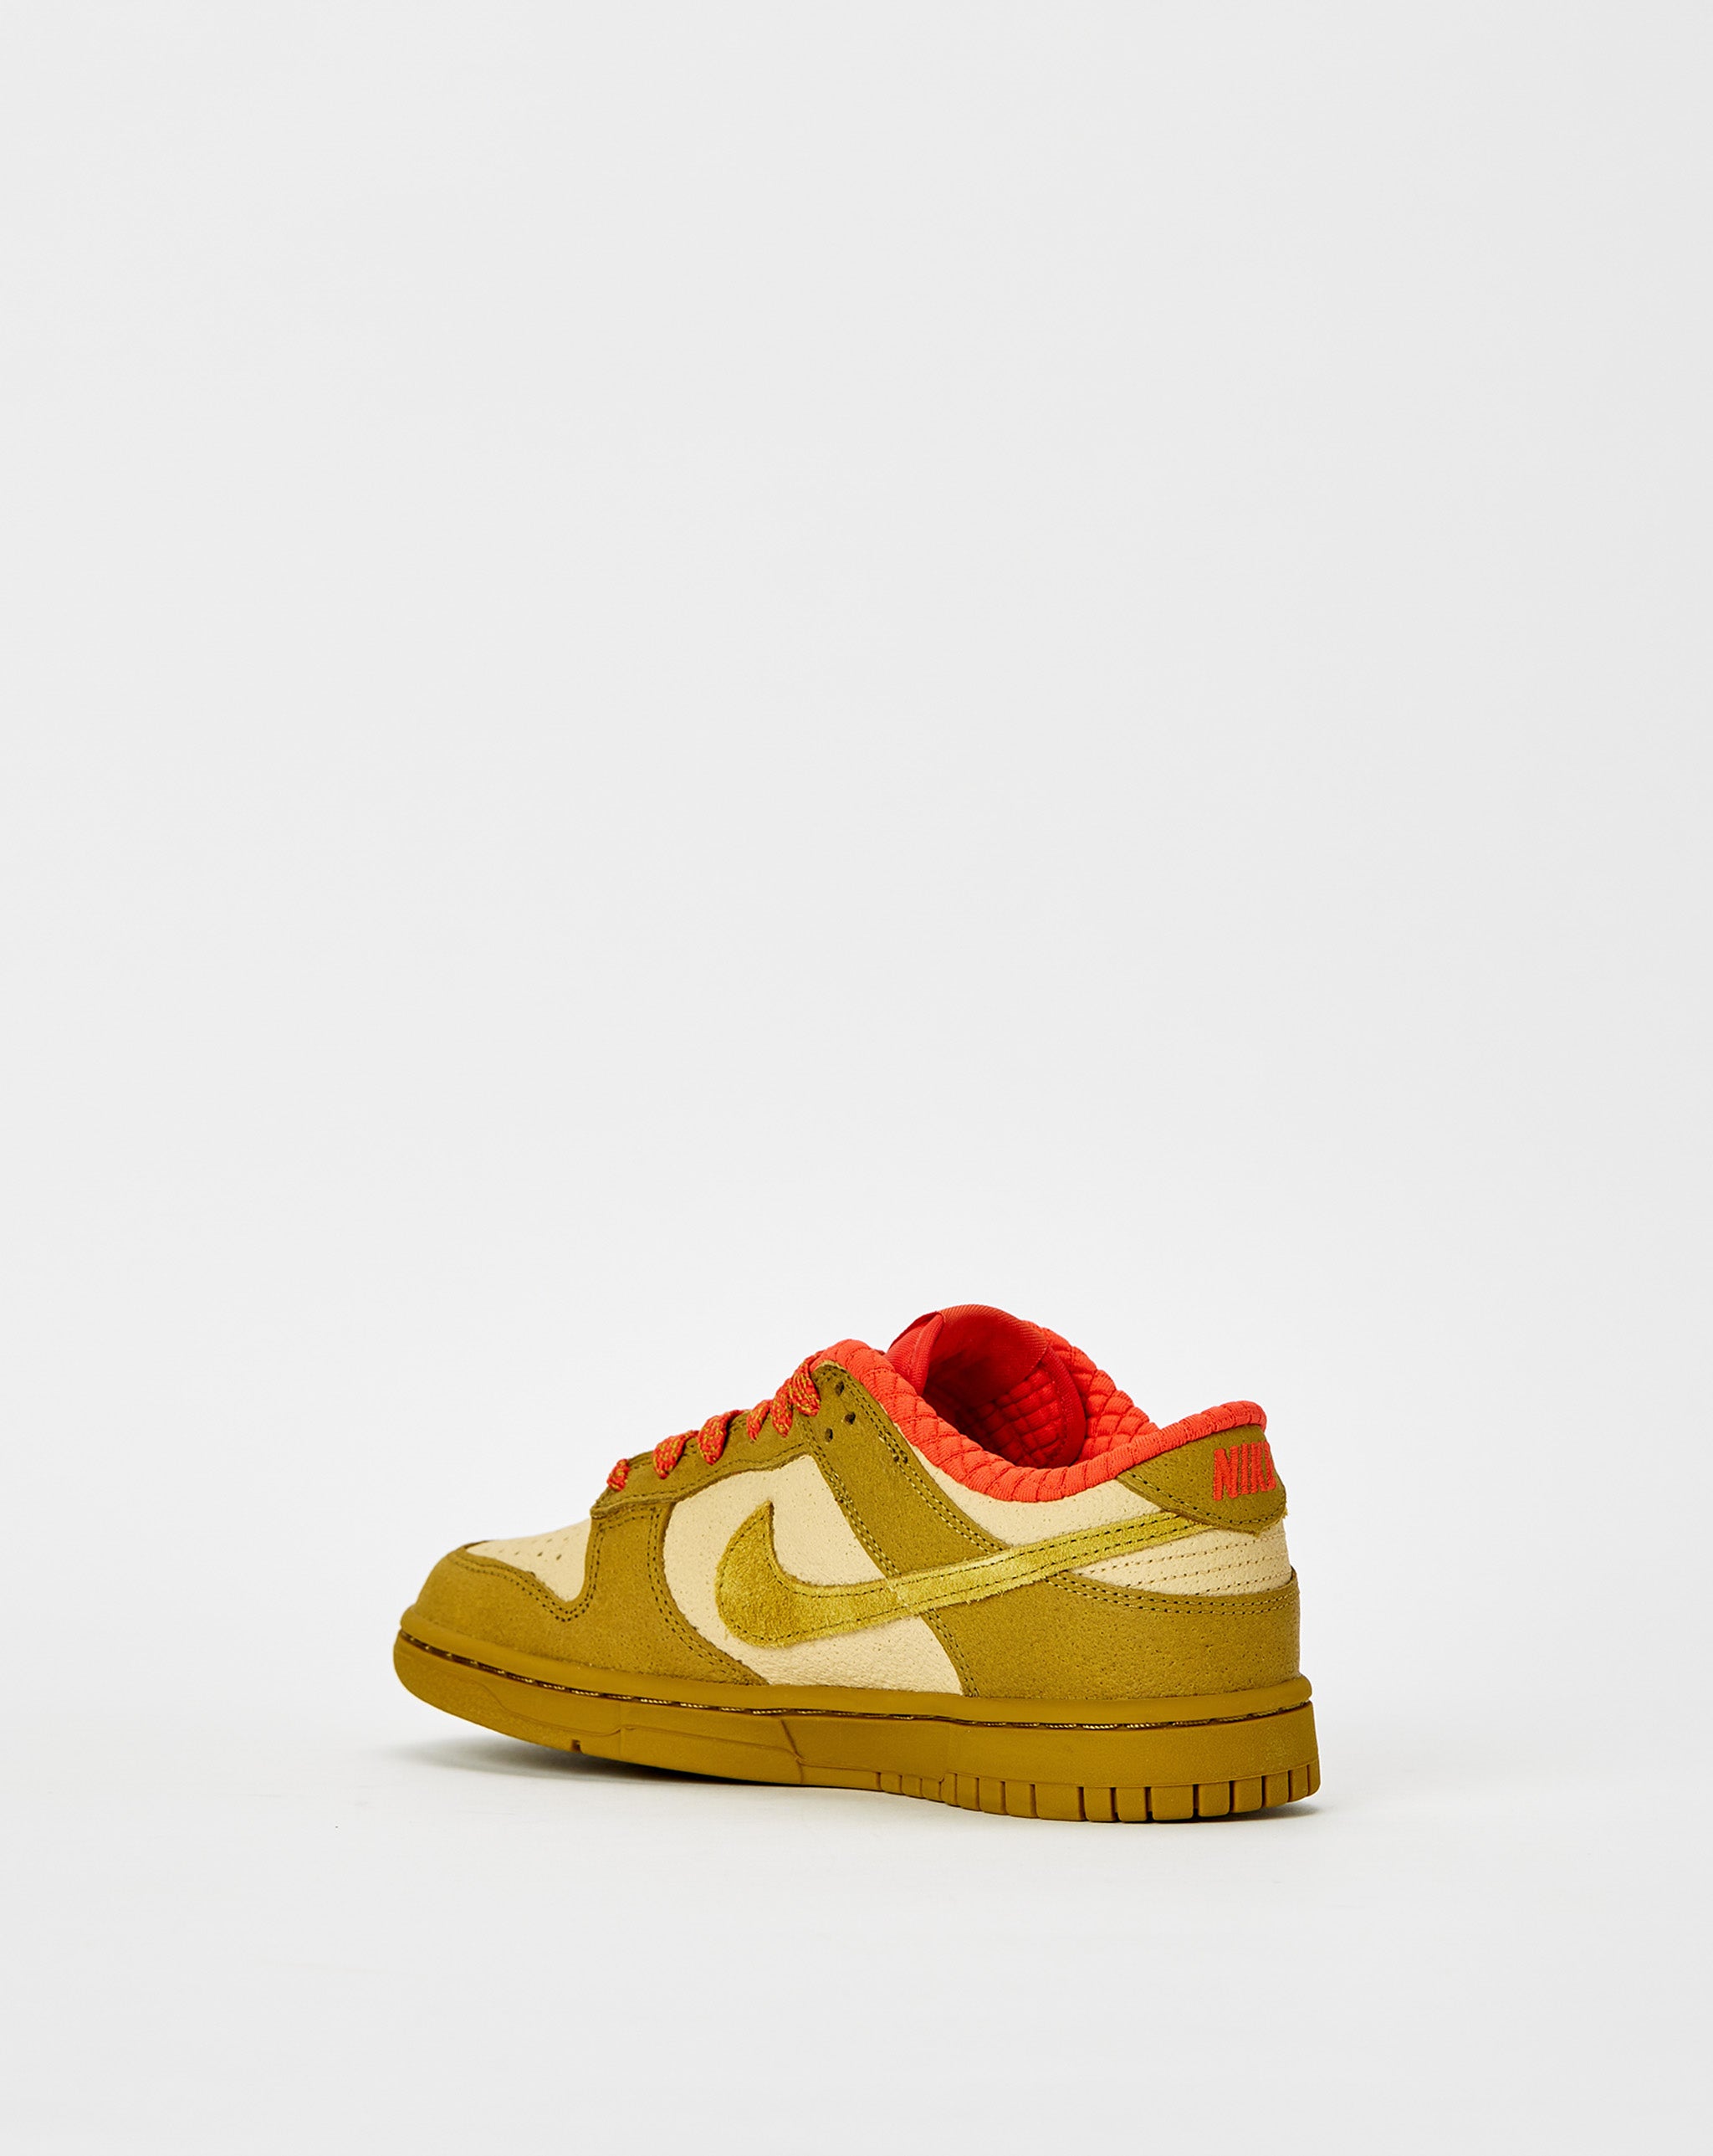 Nike nike manoa boots brown size 13 shoes for girls  - Cheap Erlebniswelt-fliegenfischen Jordan outlet